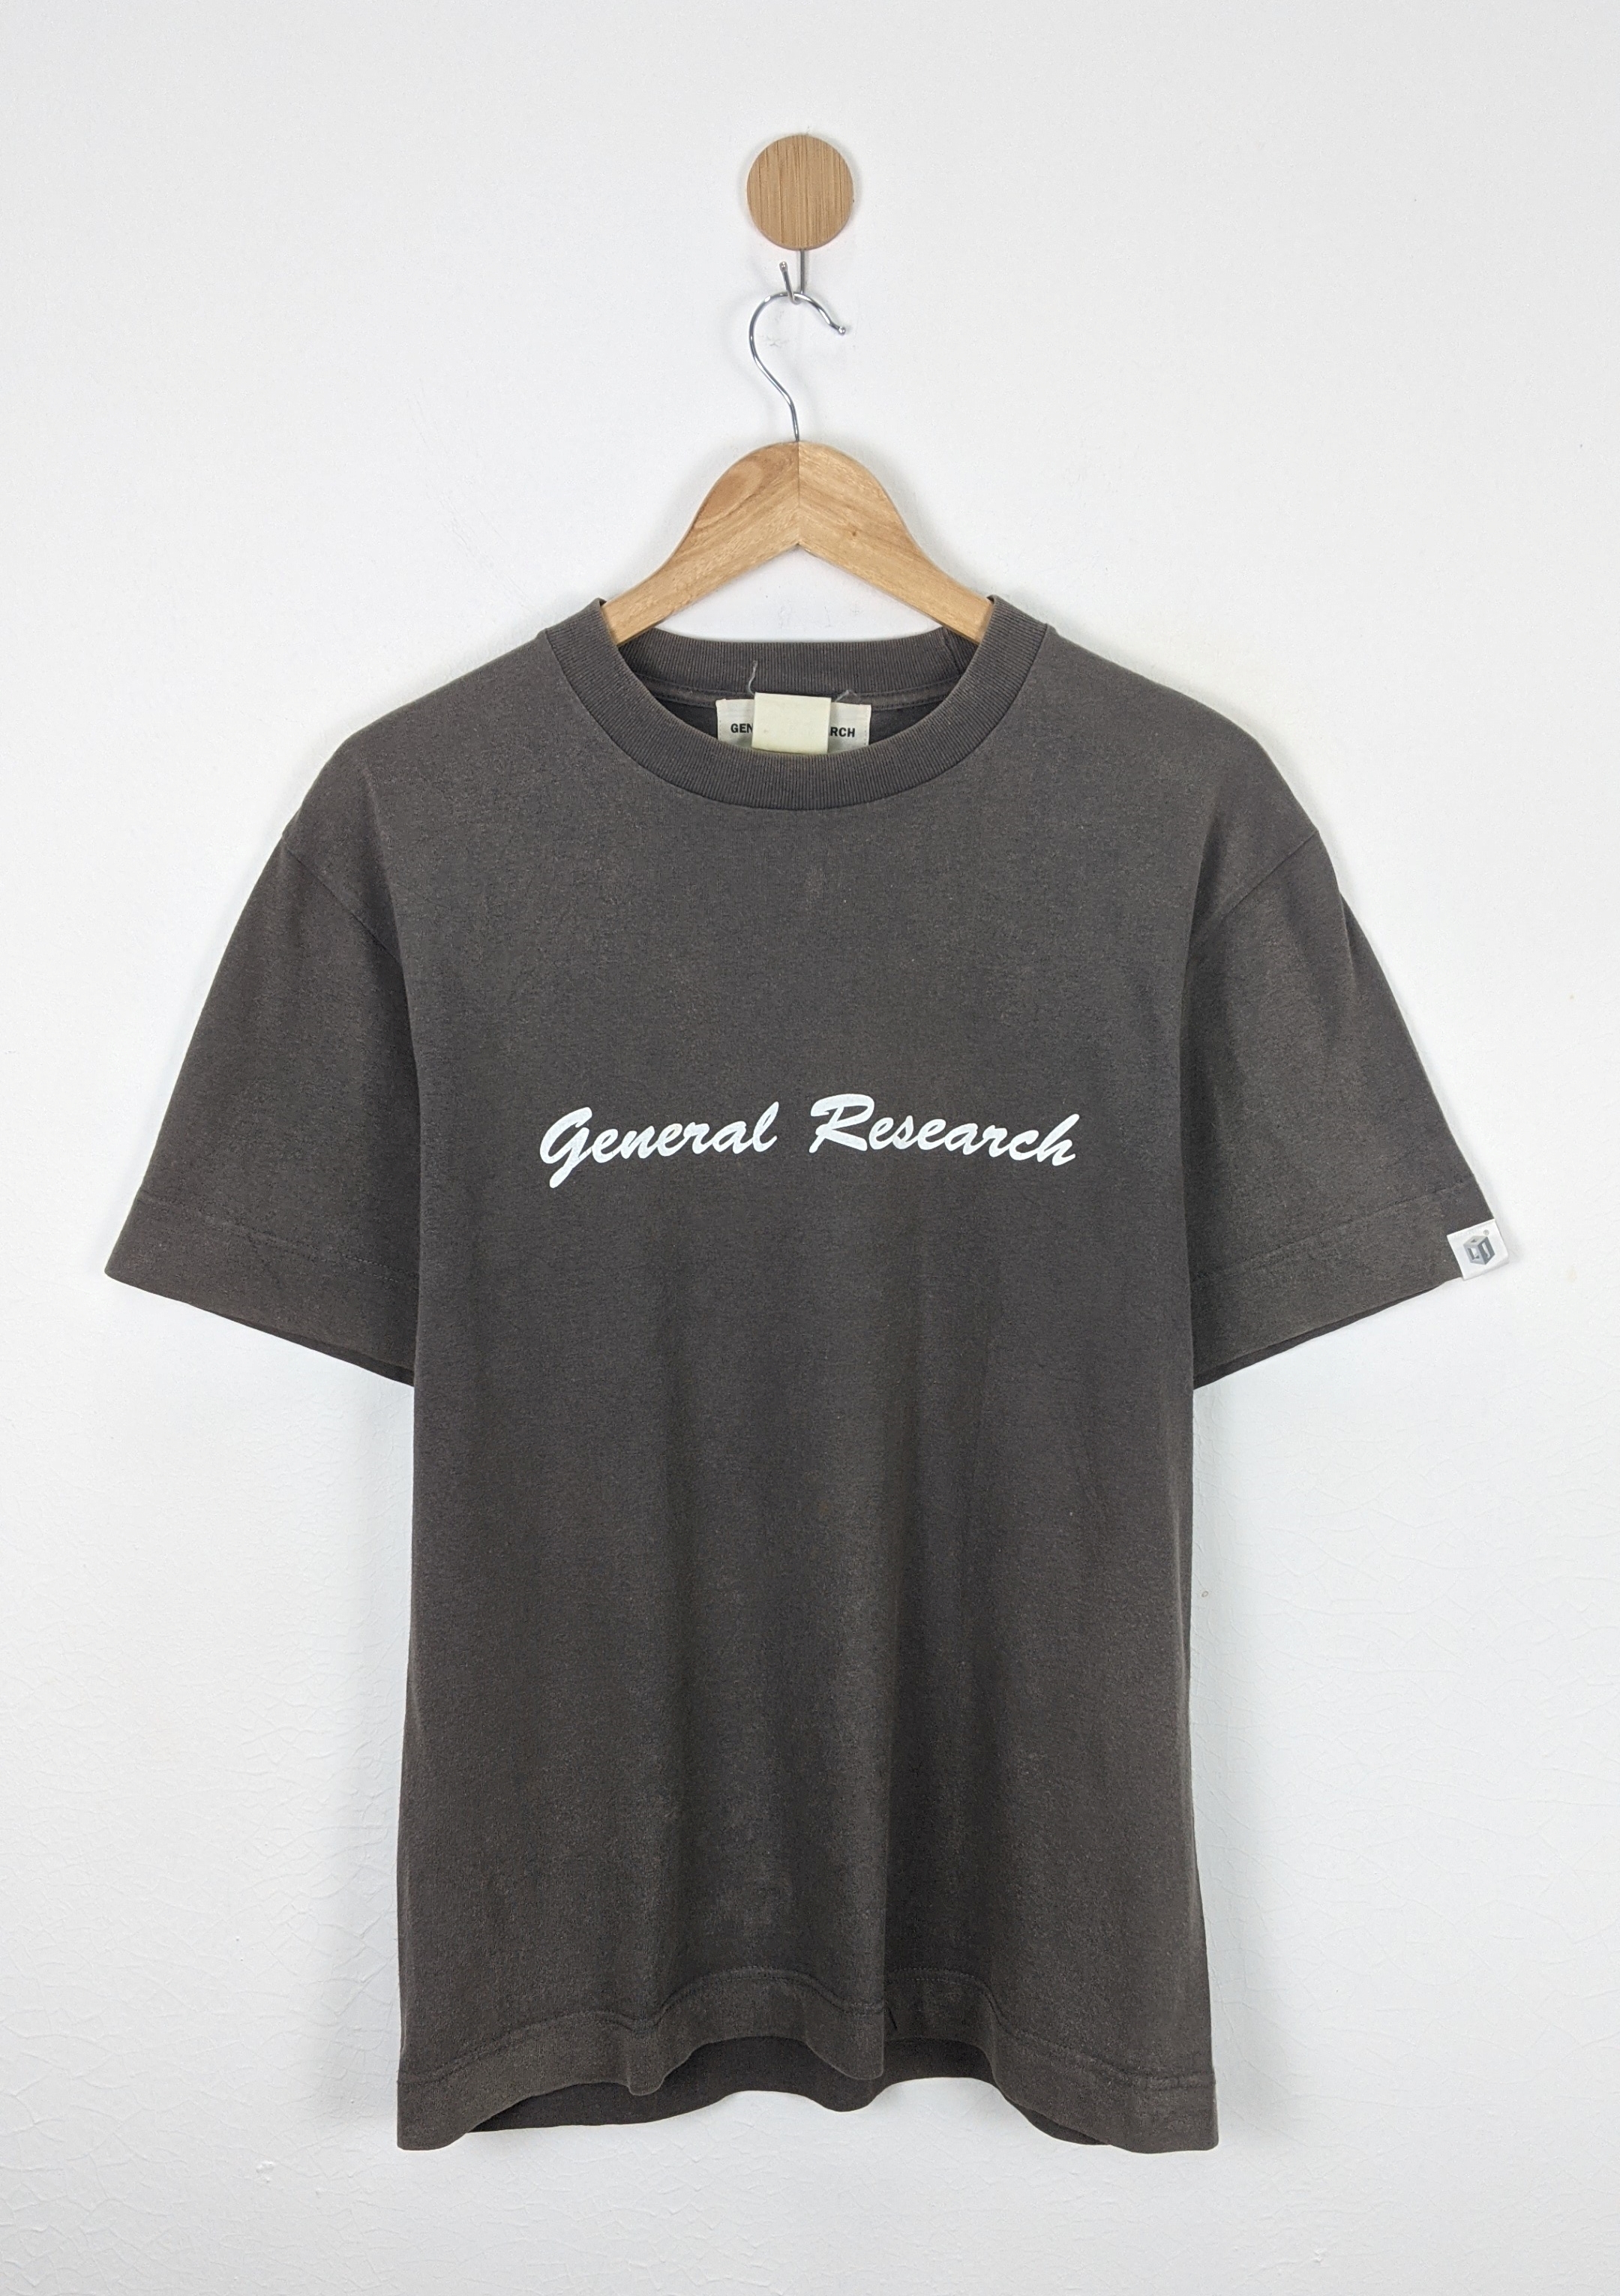 General Research 2001 shirt - 1